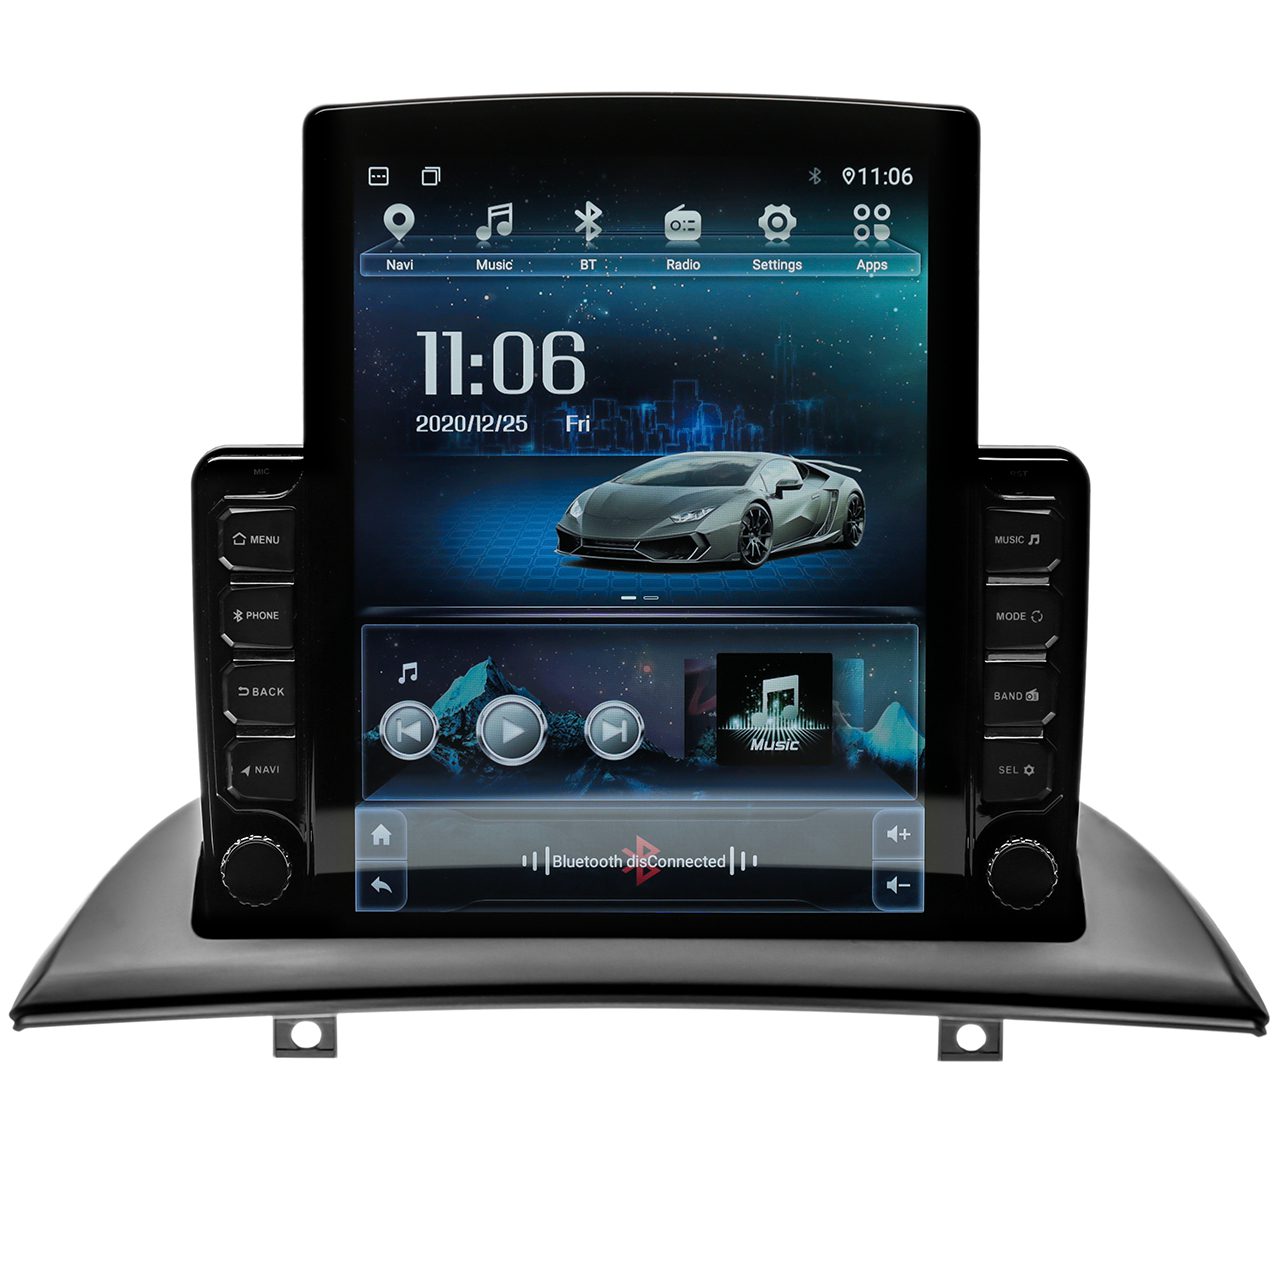 Navigatie AUTONAV Android GPS Dedicata BMW X3 E83, Model XPERT Memorie 32GB Stocare, 2GB DDR3 RAM, Butoane Si Volum Fizice, Display Vertical Stil Tesla 10